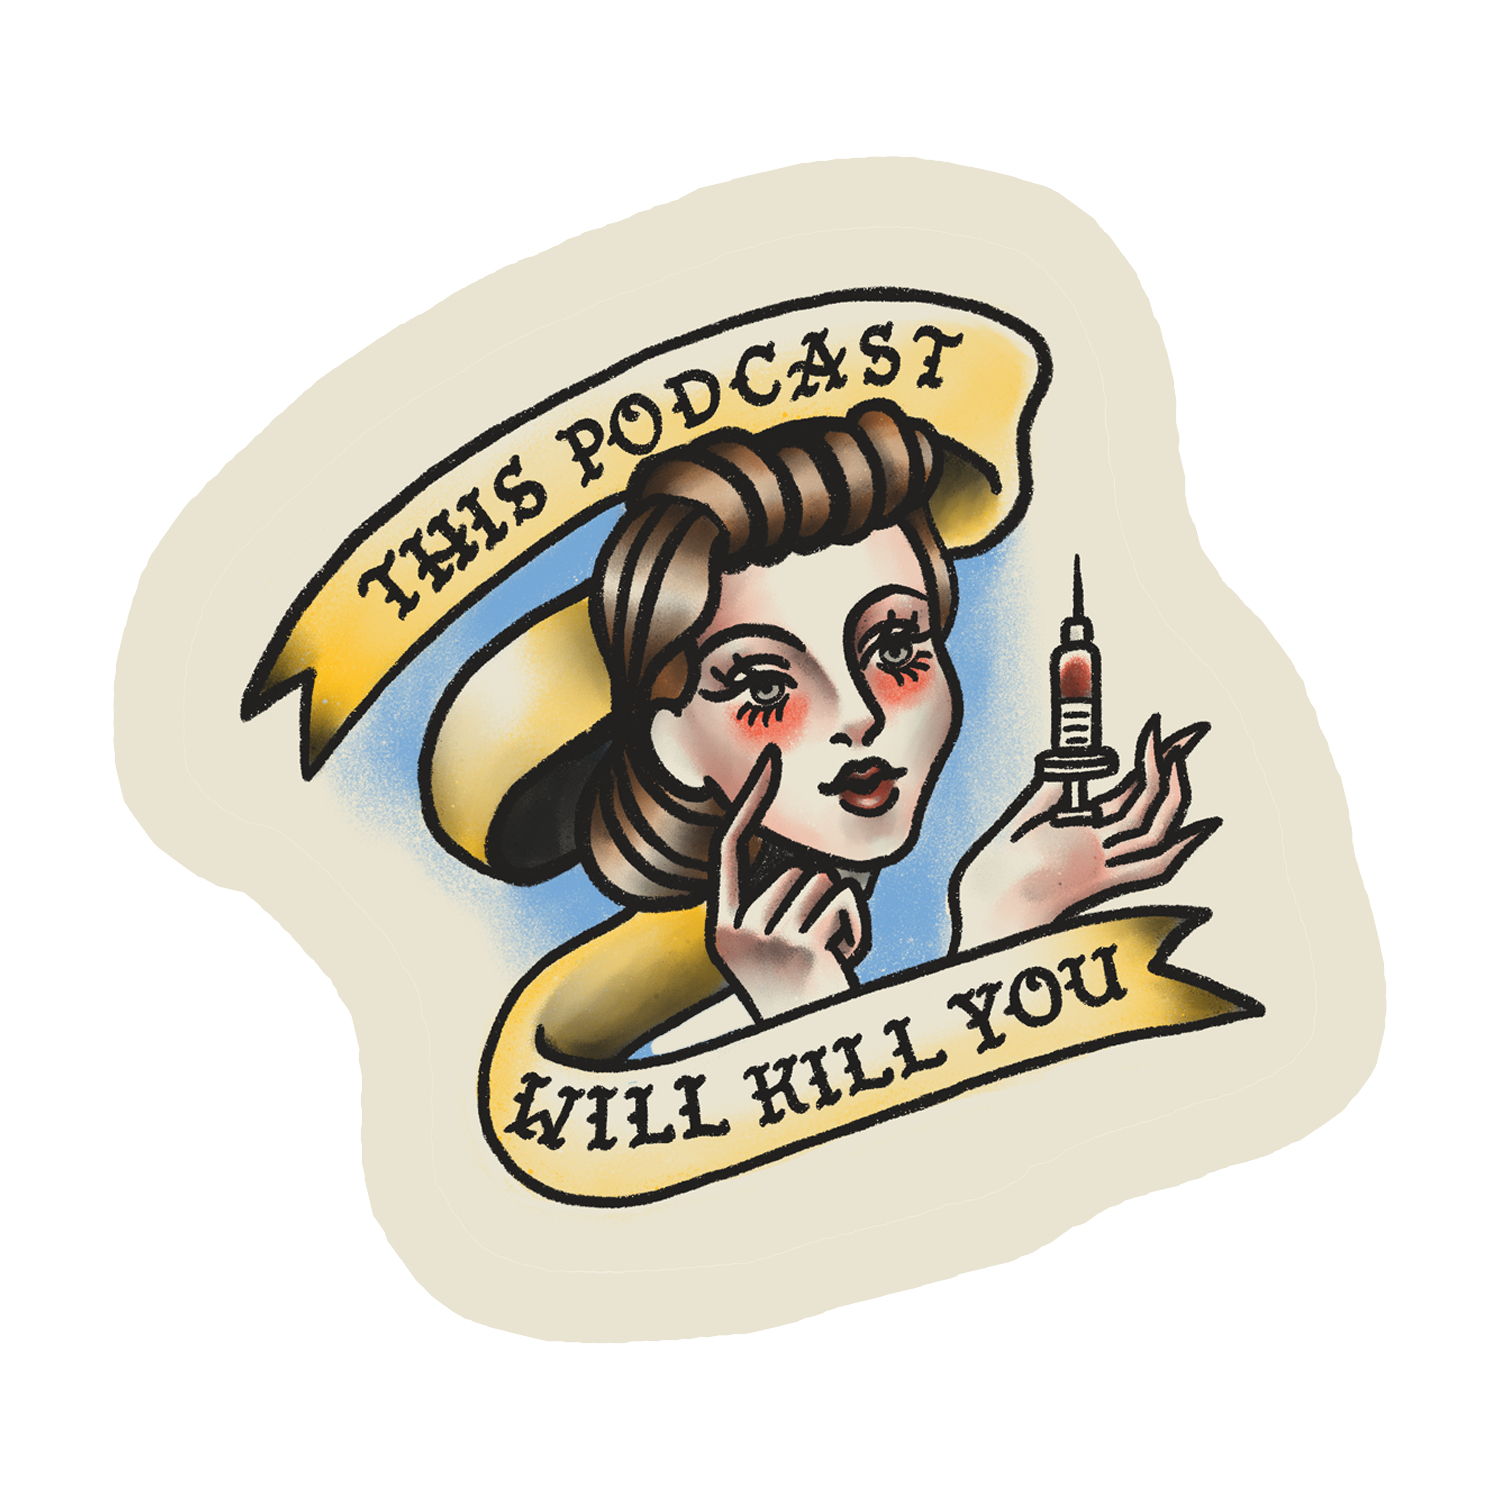 This Podcast Will Kill You: Tattoo Sticker